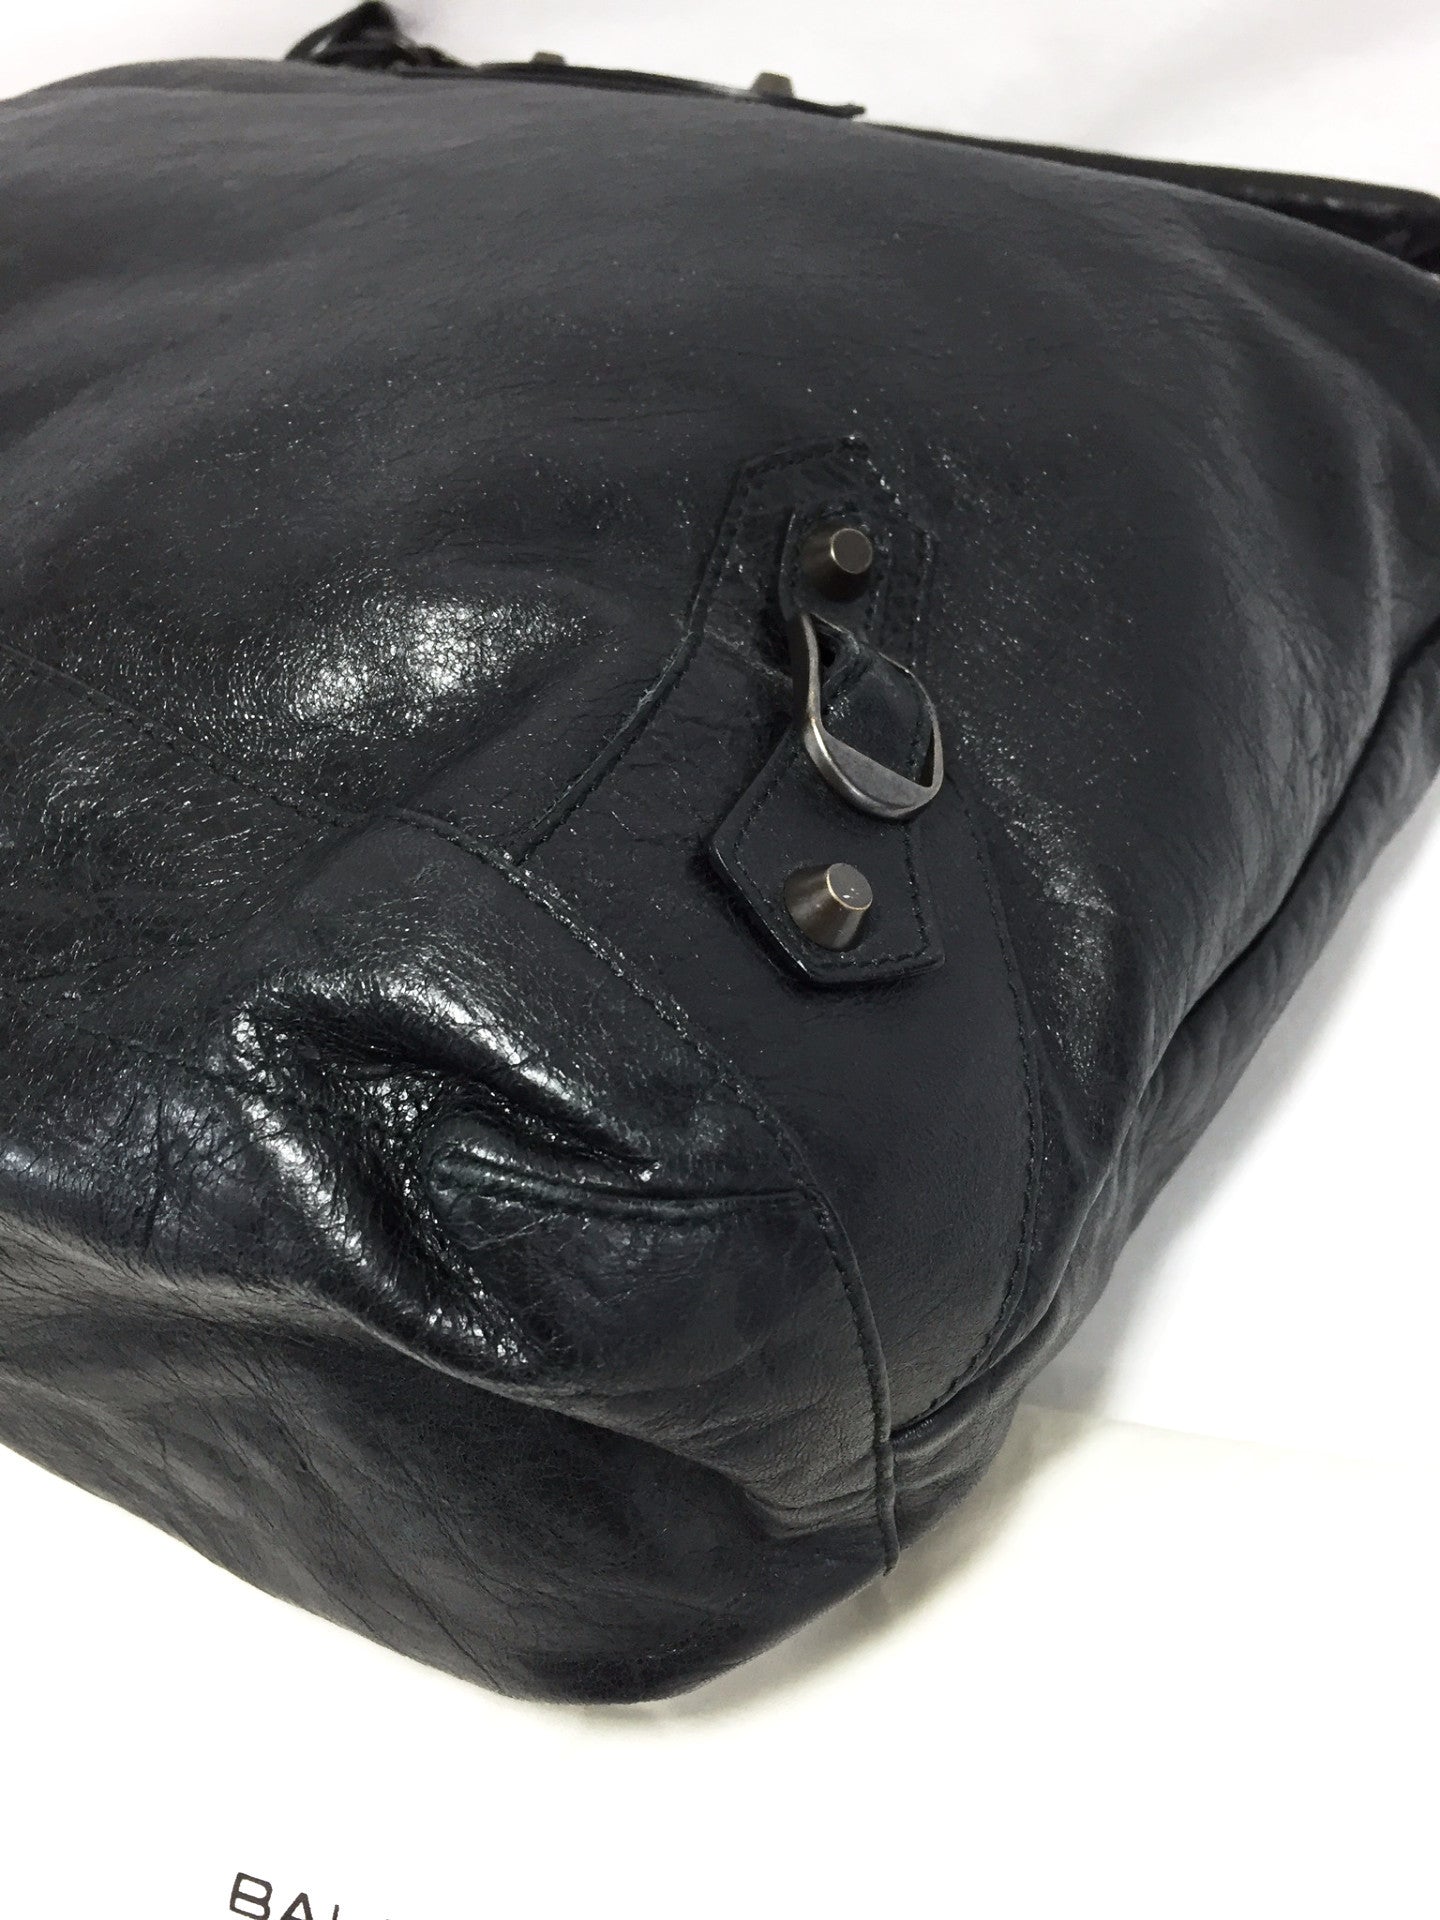 BALENCIAGA Black Leather Shoulder Hobo Bag